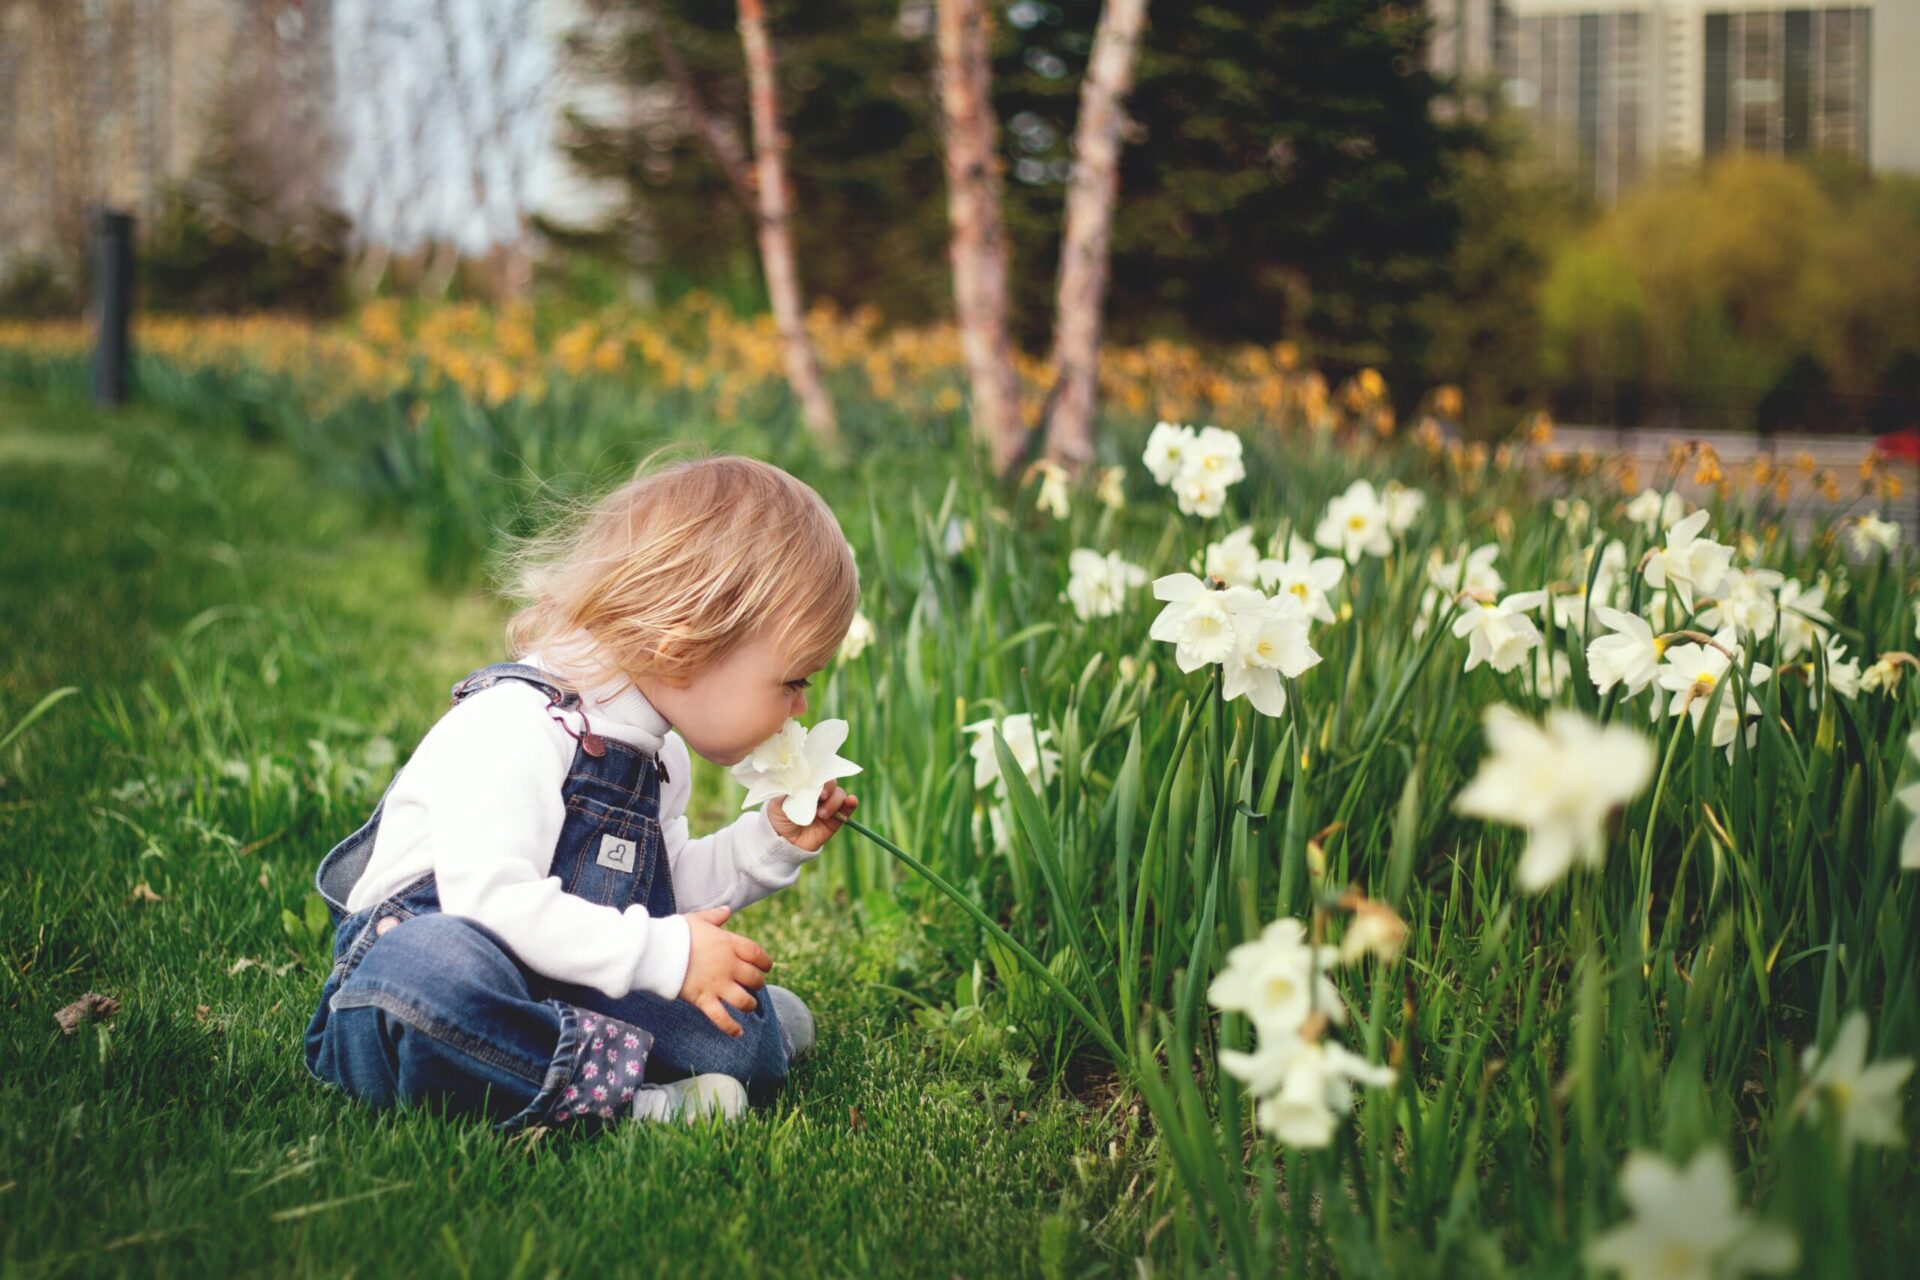 Photo by Tetyana Kovyrina: https://www.pexels.com/photo/girl-sitting-on-grass-smelling-white-petaled-flower-1879288/